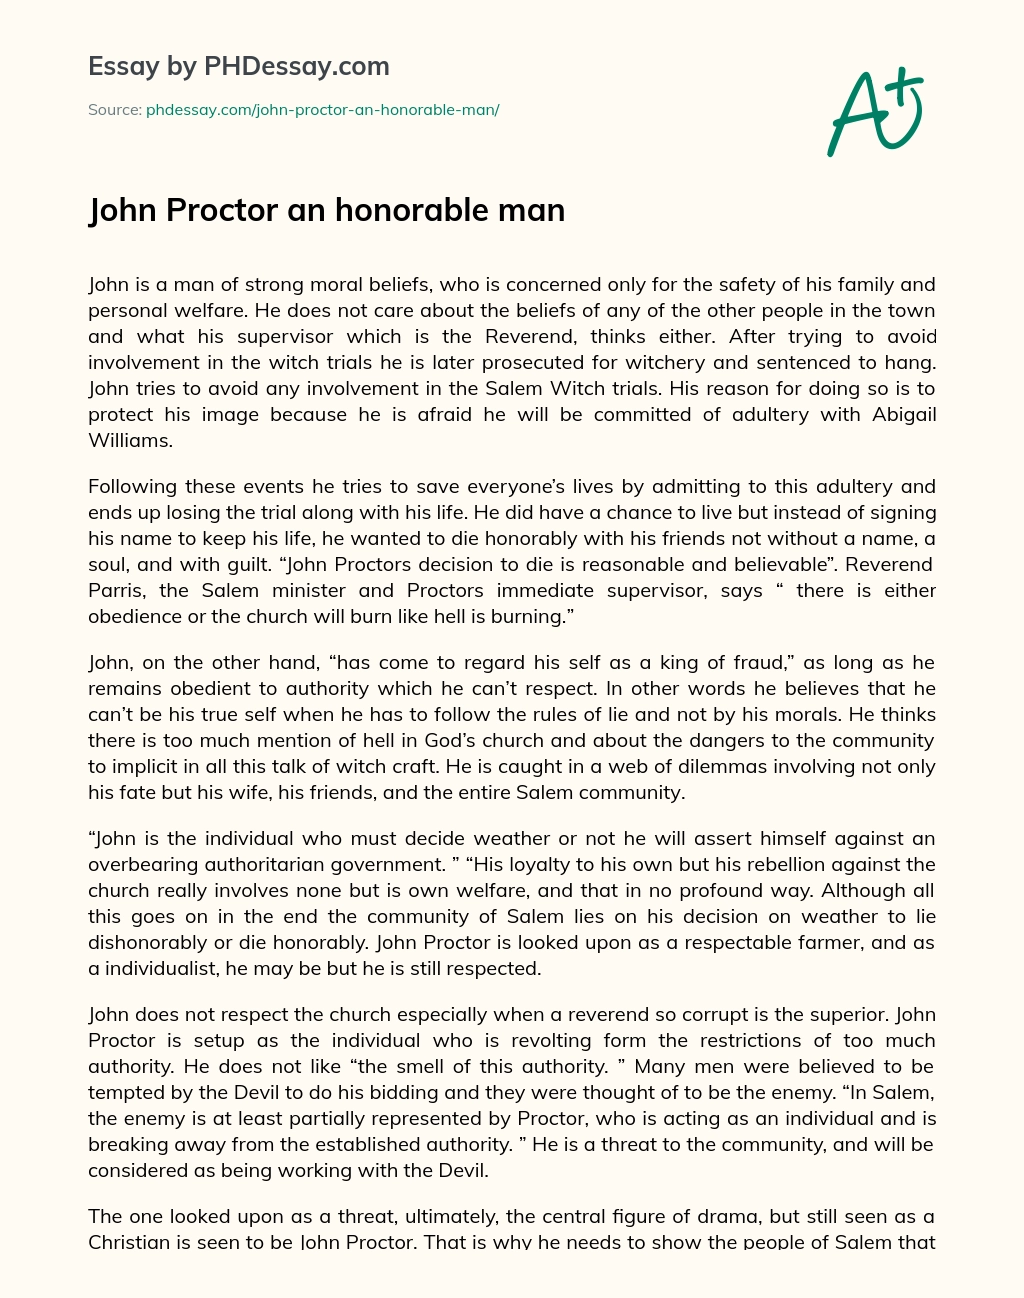 John Proctor an honorable man essay